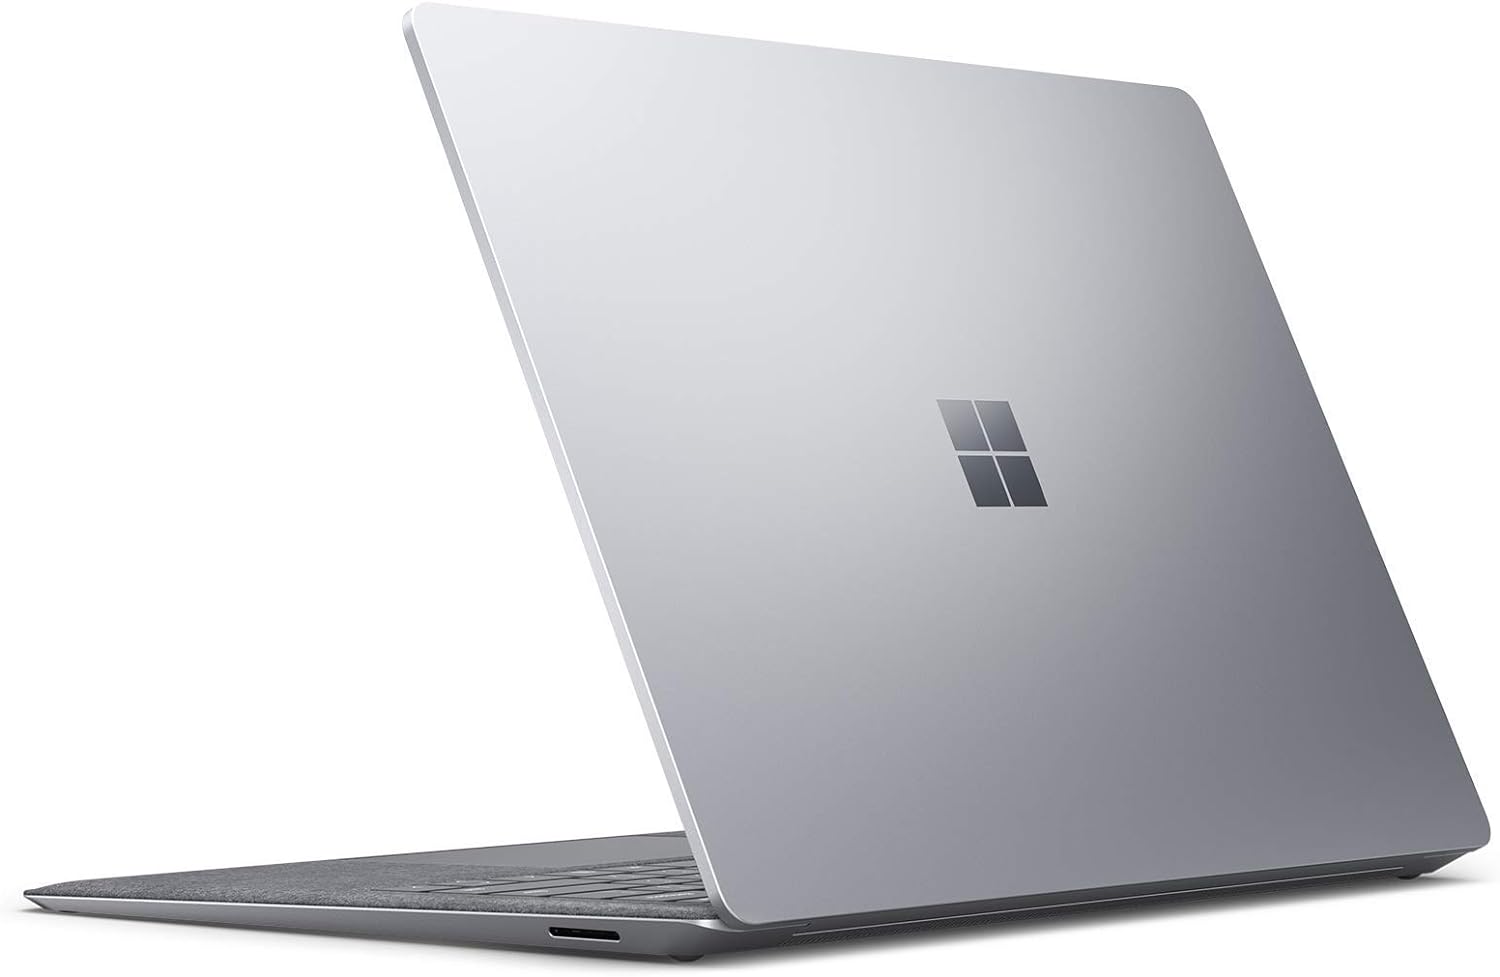 Microsoft Surface Laptop 3 | i7-1065G7 | 13.5